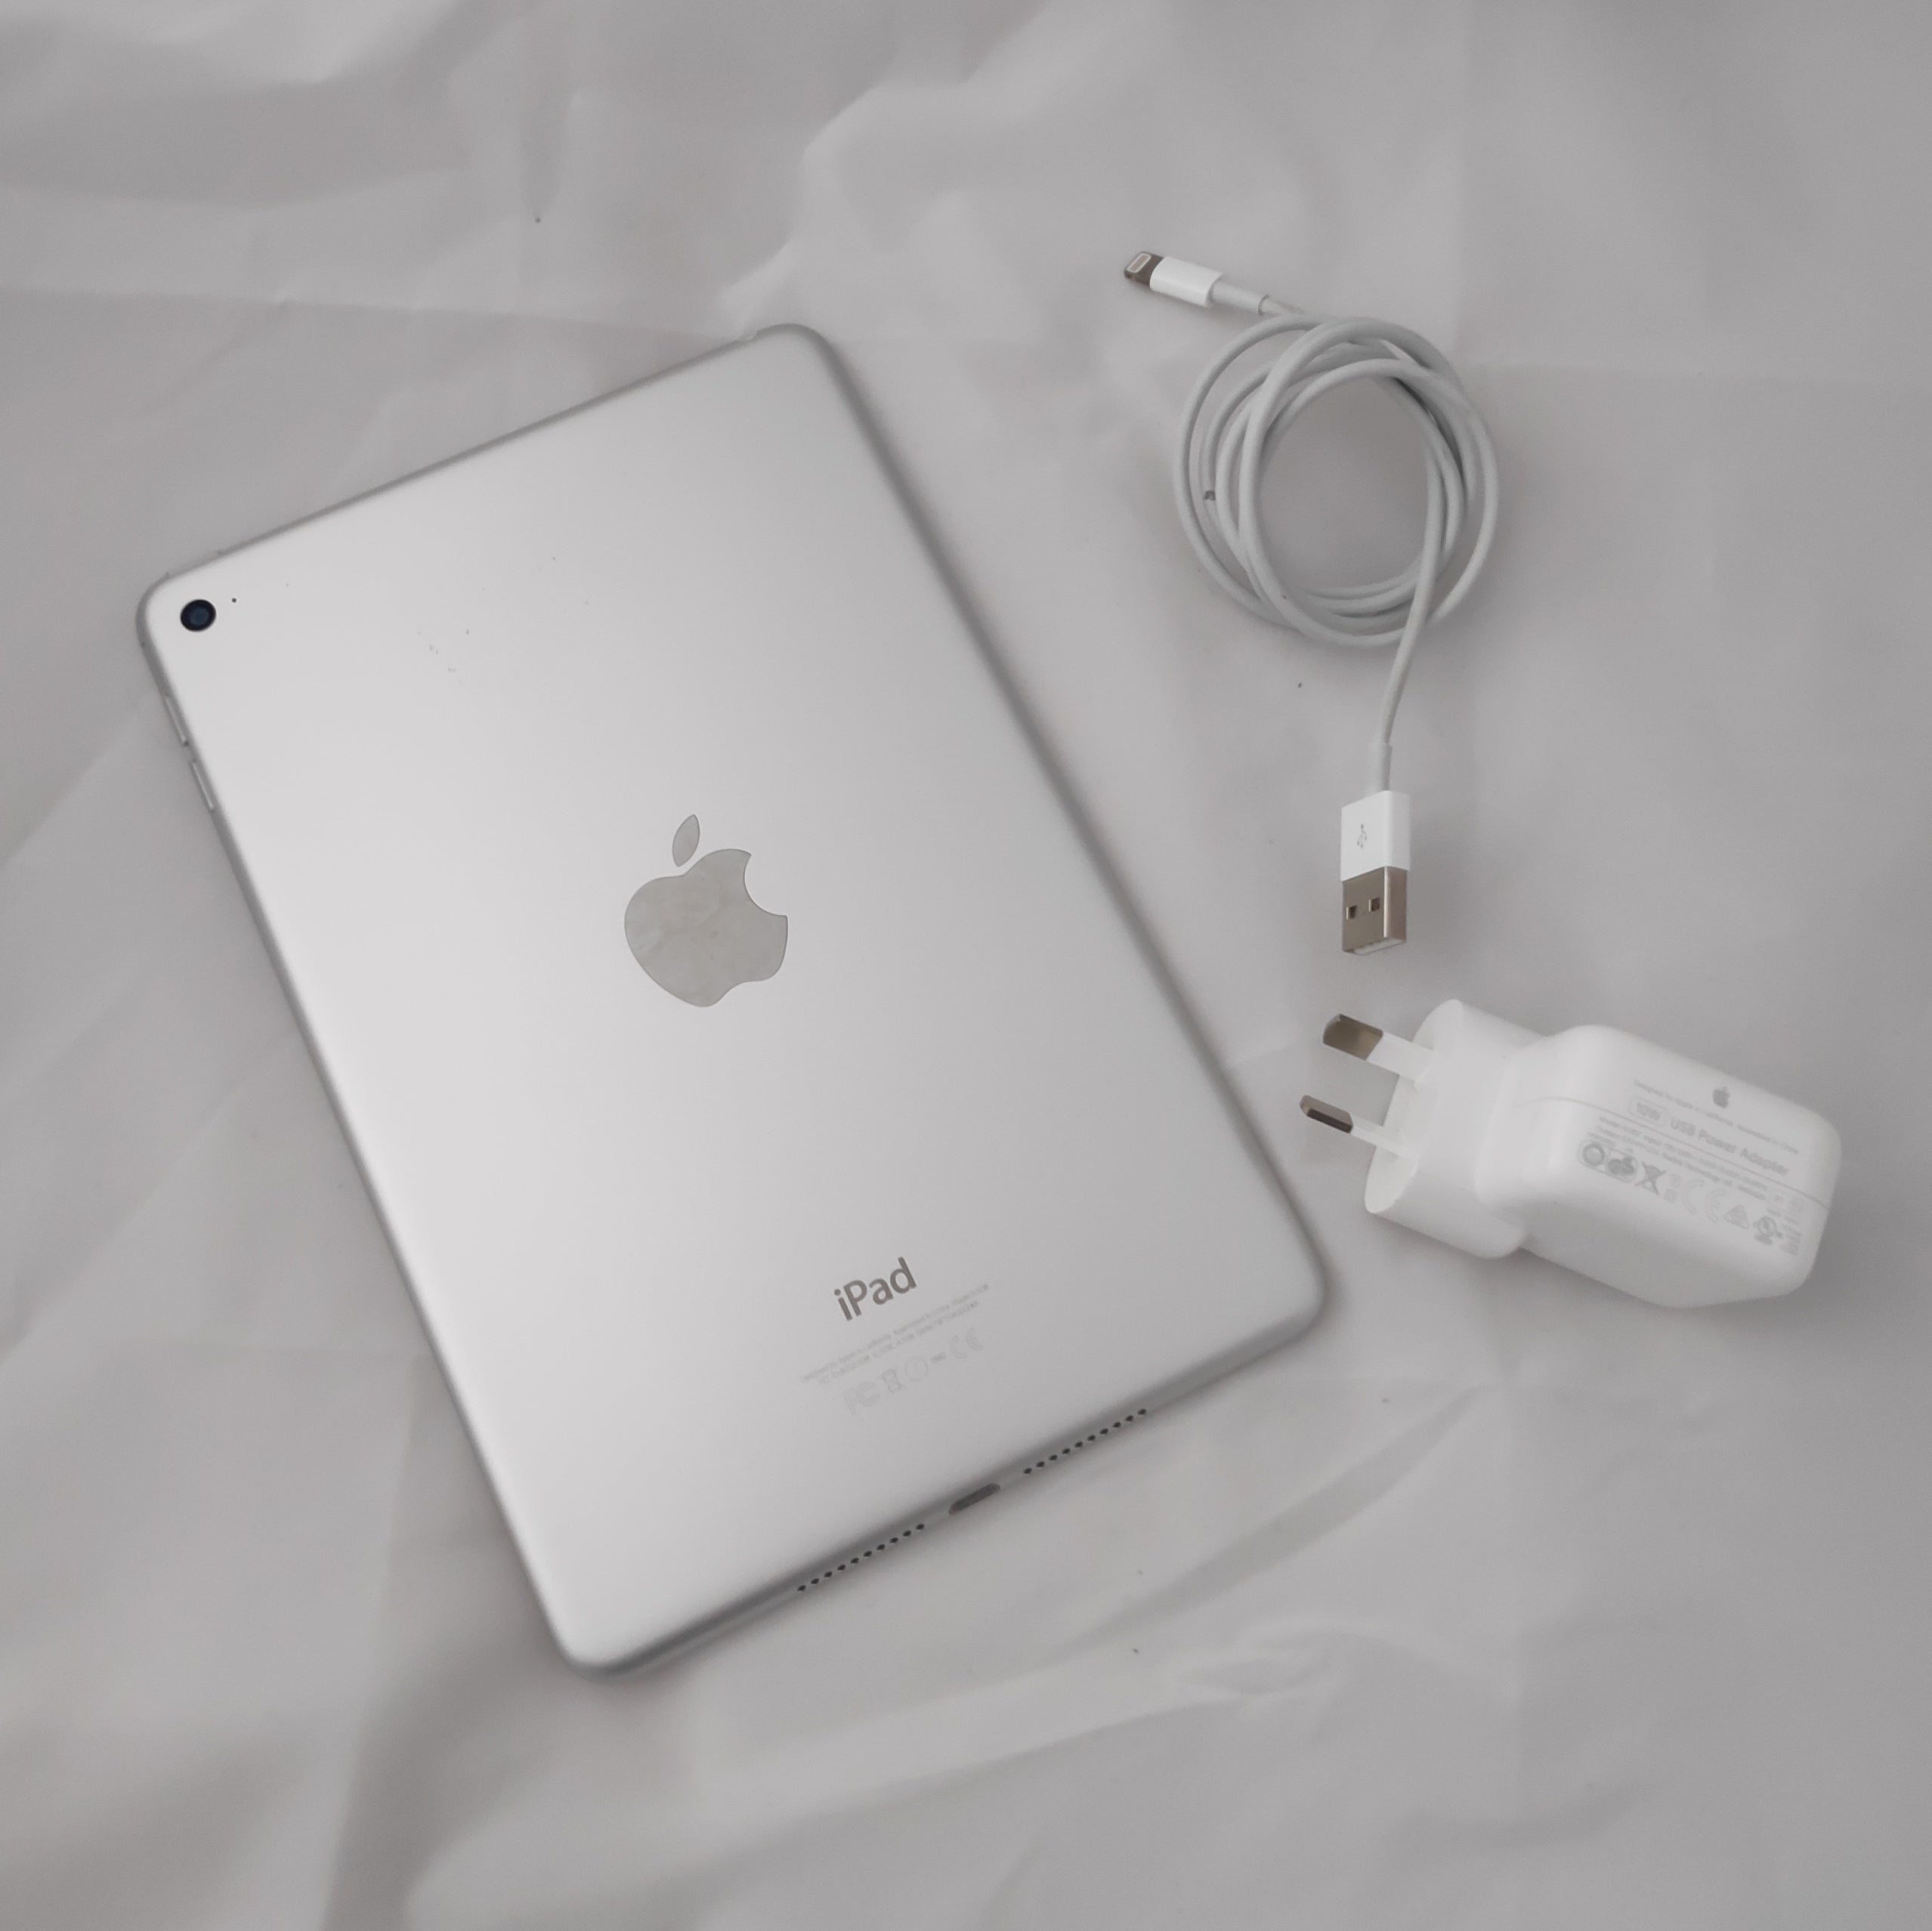 Apple iPad Mini 4 32GB White Wifi (As New) New Battery, Glass Screen Protector & Shipping*